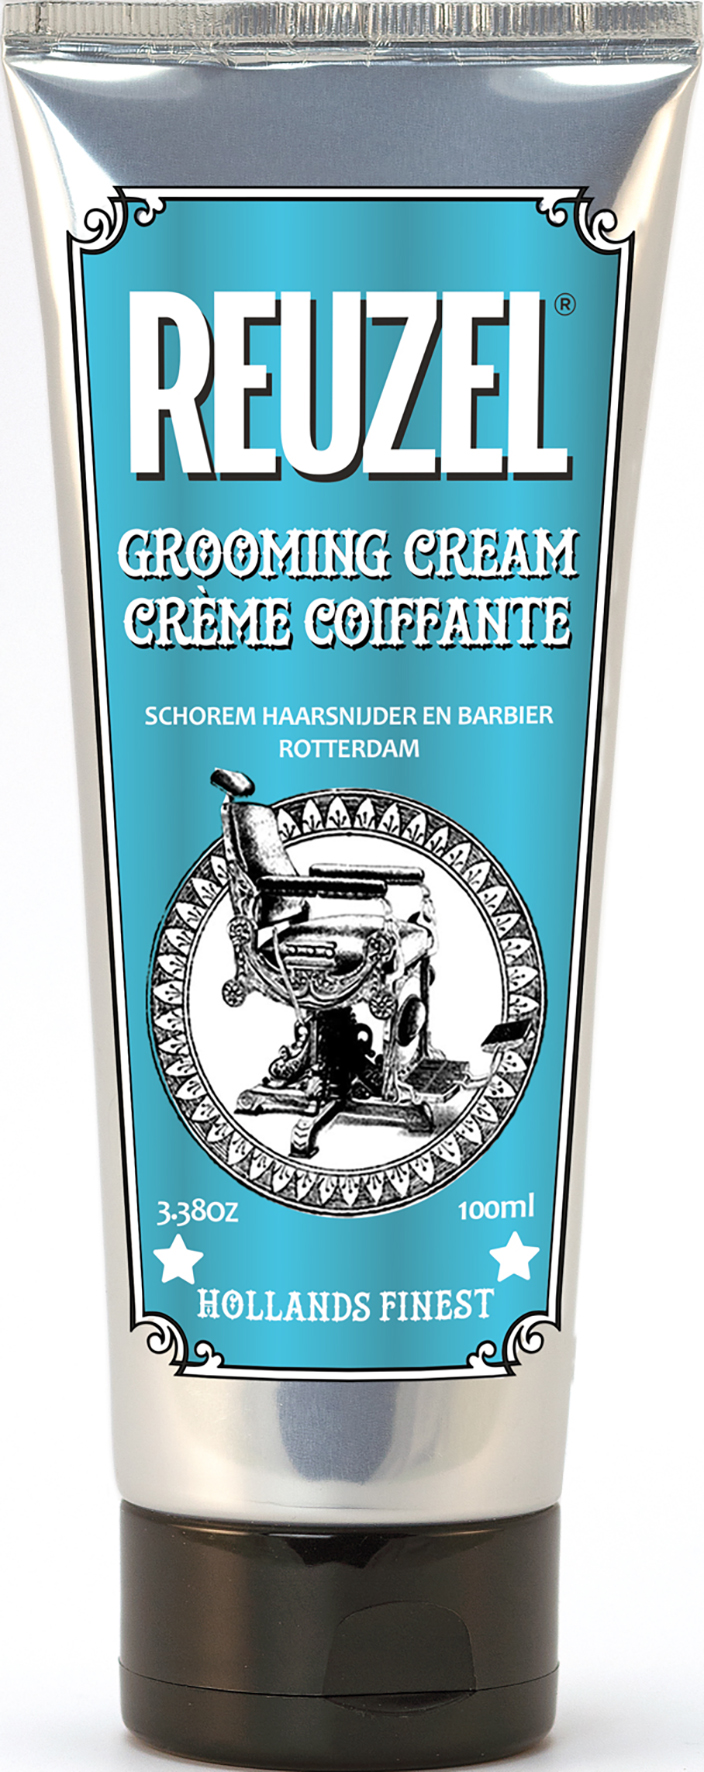 Reuzelgrooming Cream, 100ml